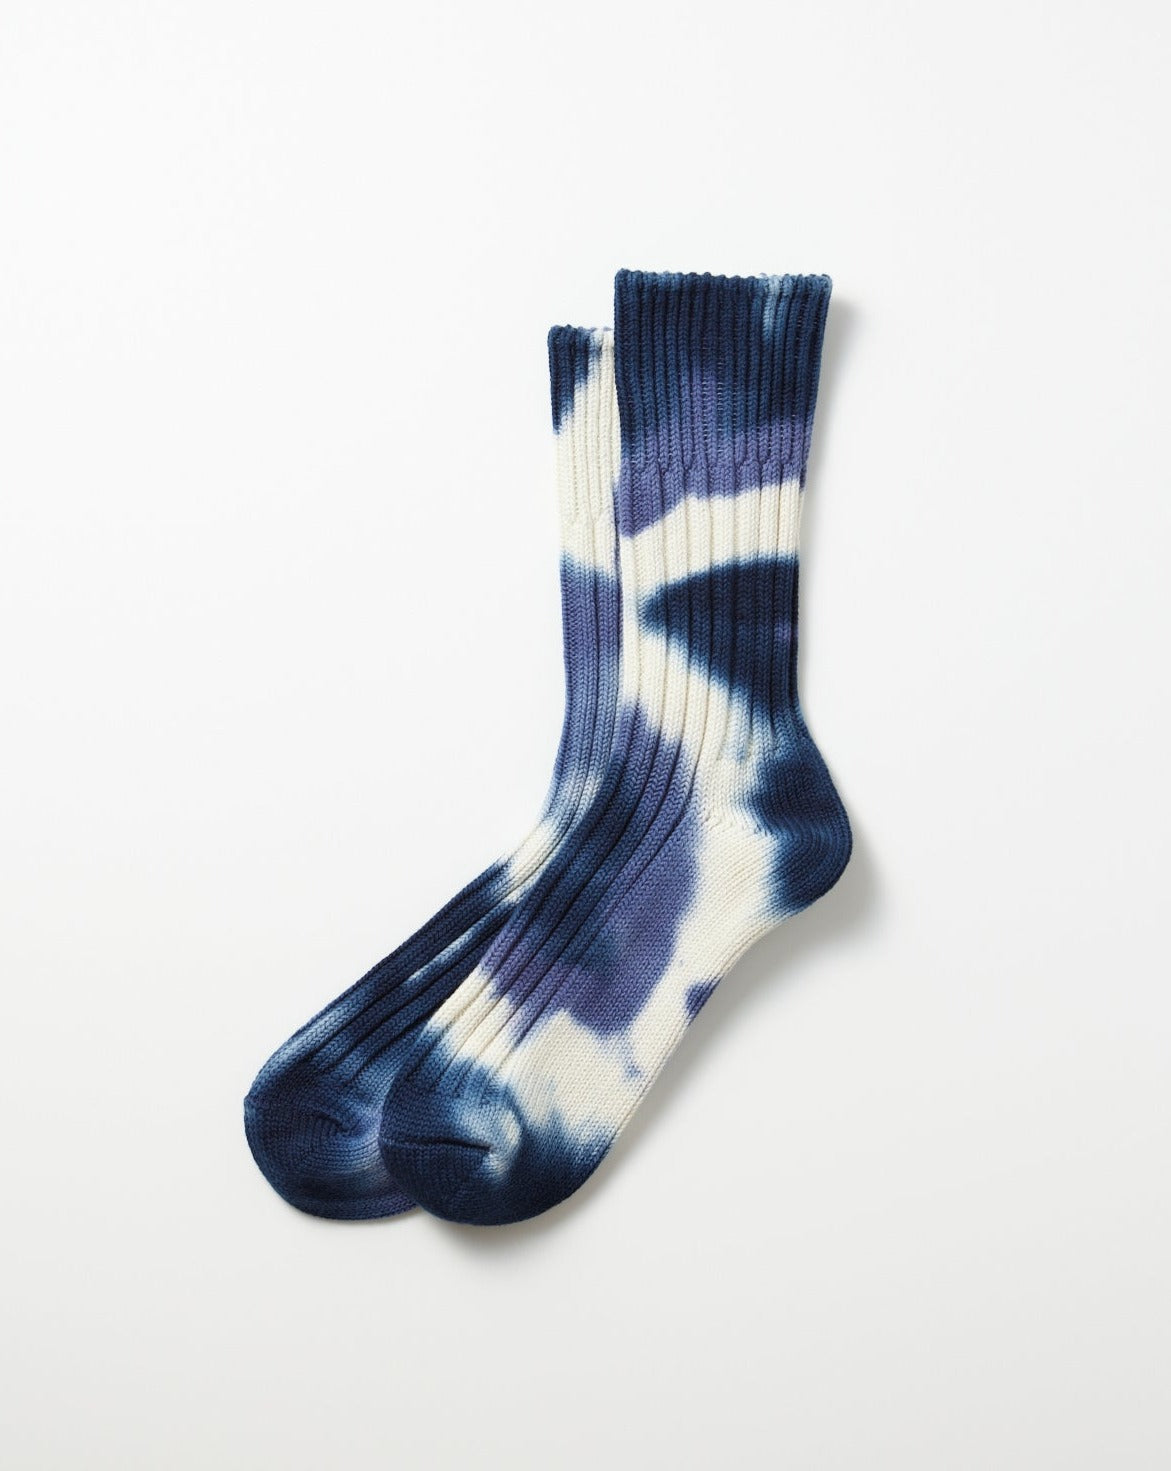 Chunky Ribbed Crew Socks "Tie Dye" - Navy/Blue